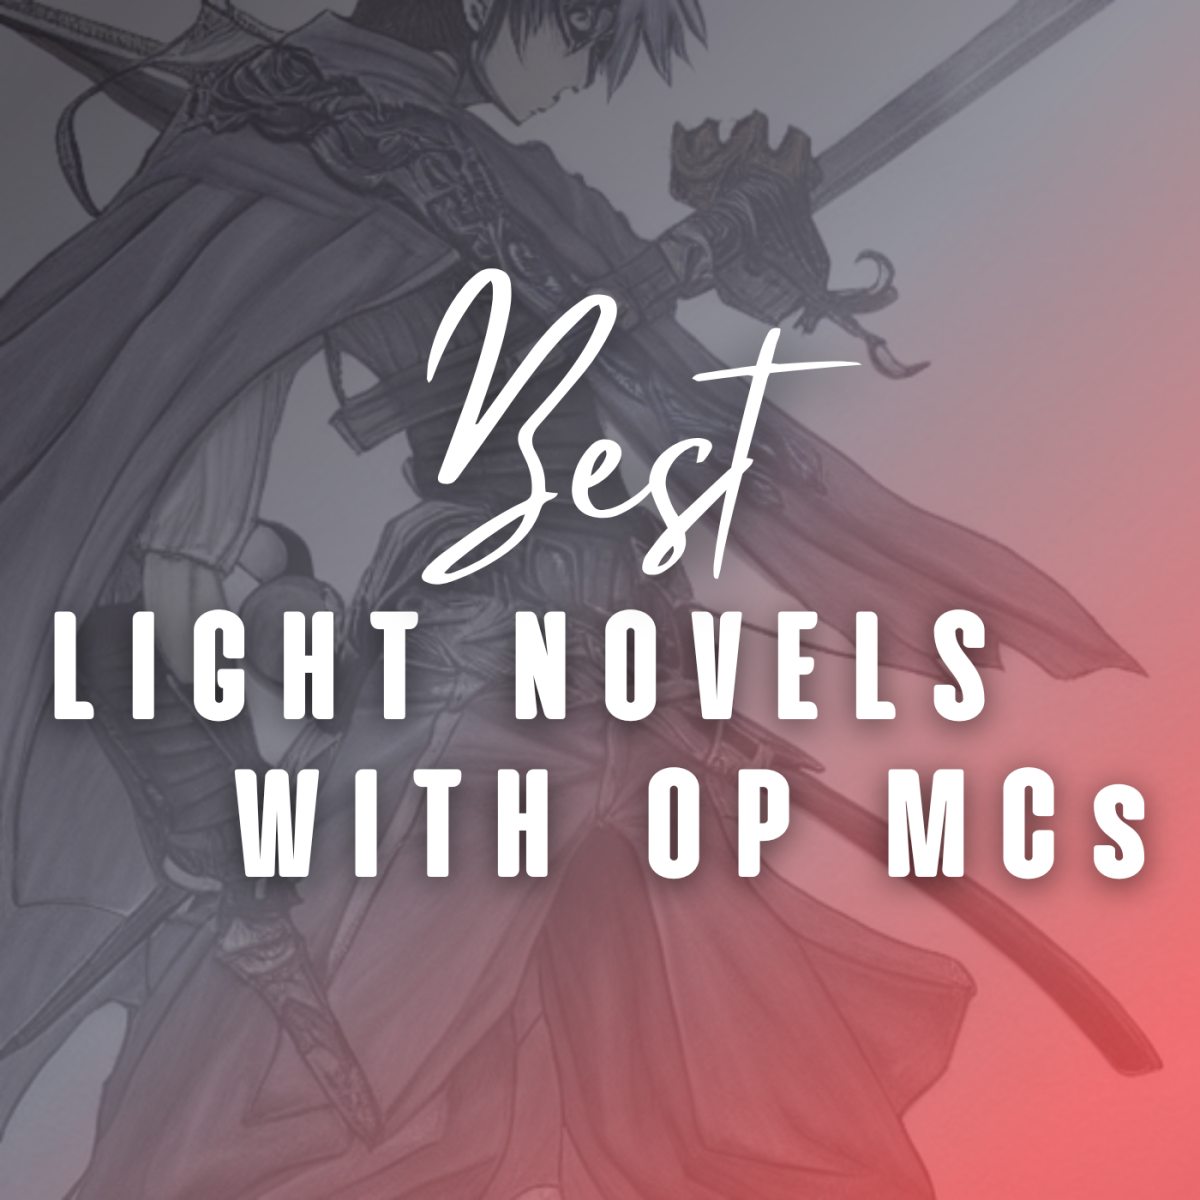 Japanese Light Novels With Insanely Powerful MCs